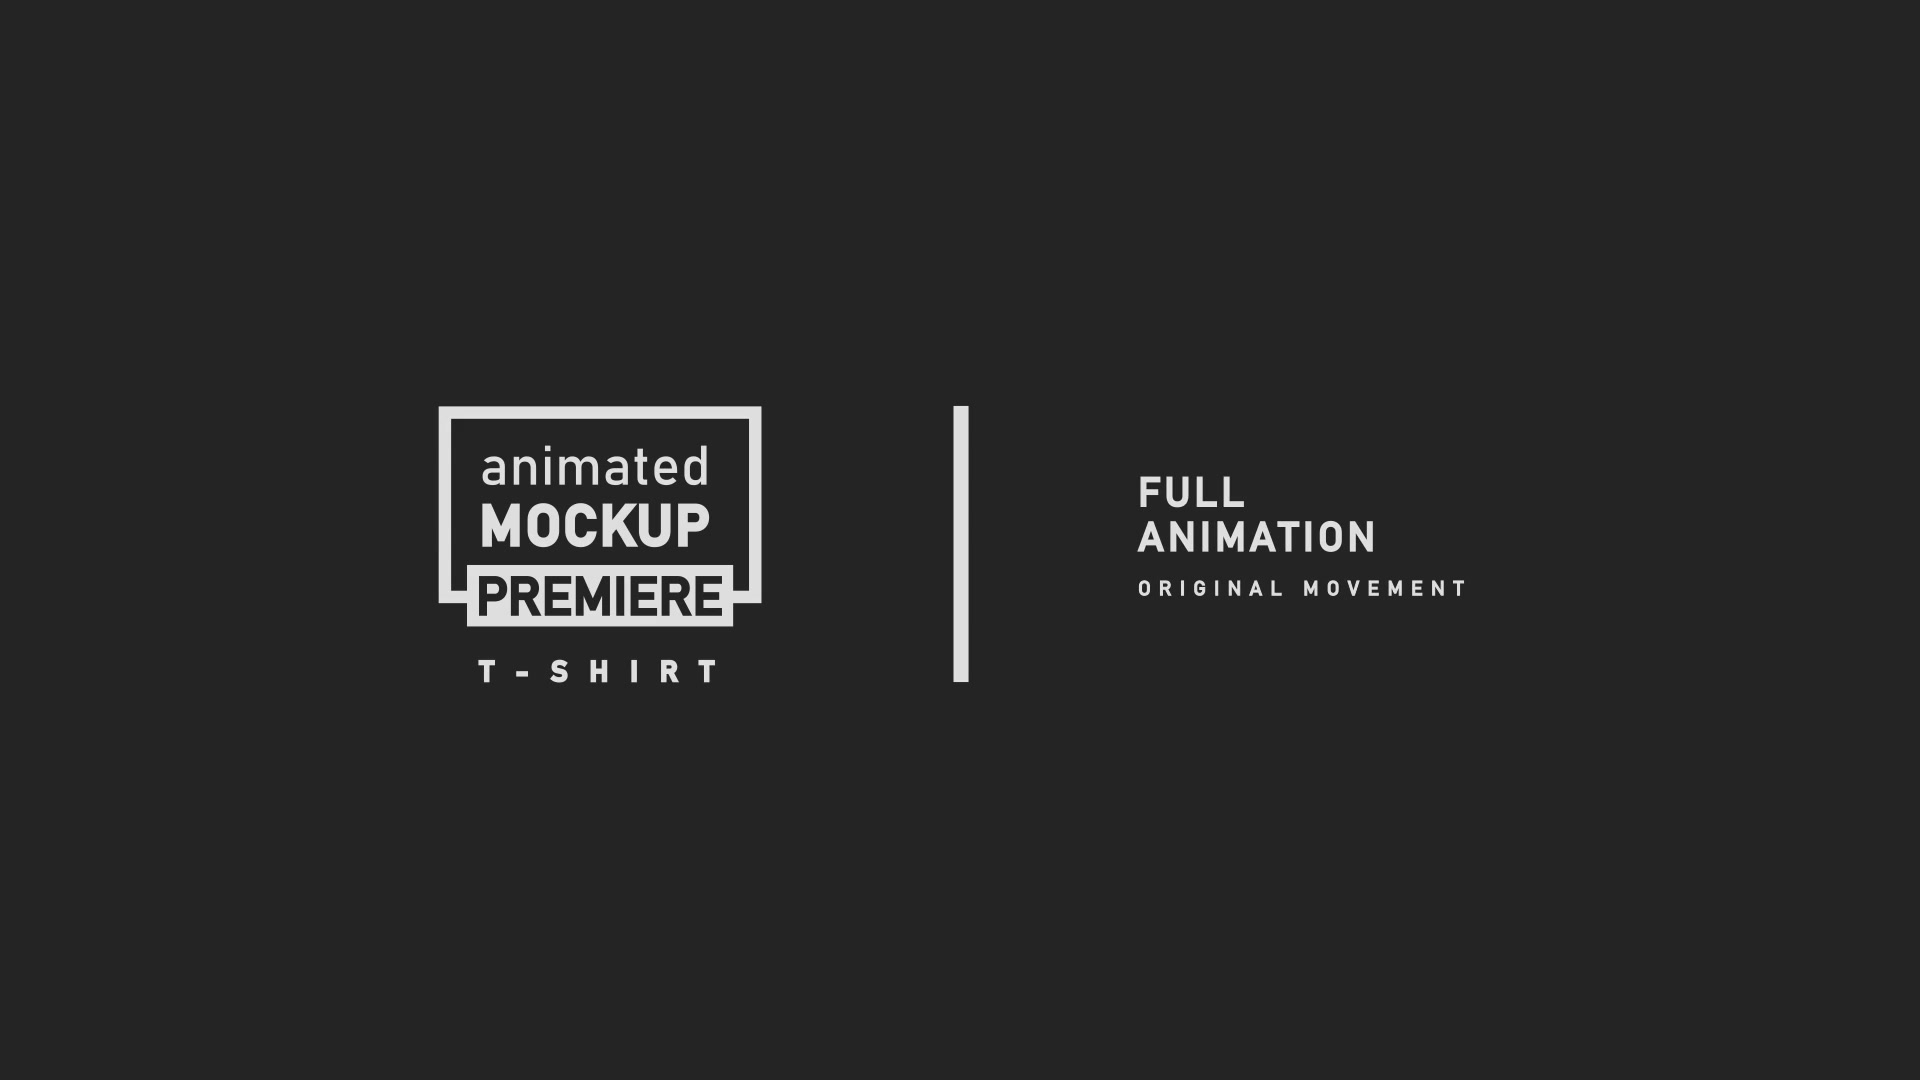 T shirt 5 Scenes Mockup Template Animated Mockup PREMIERE Videohive 33990164 Premiere Pro Image 6